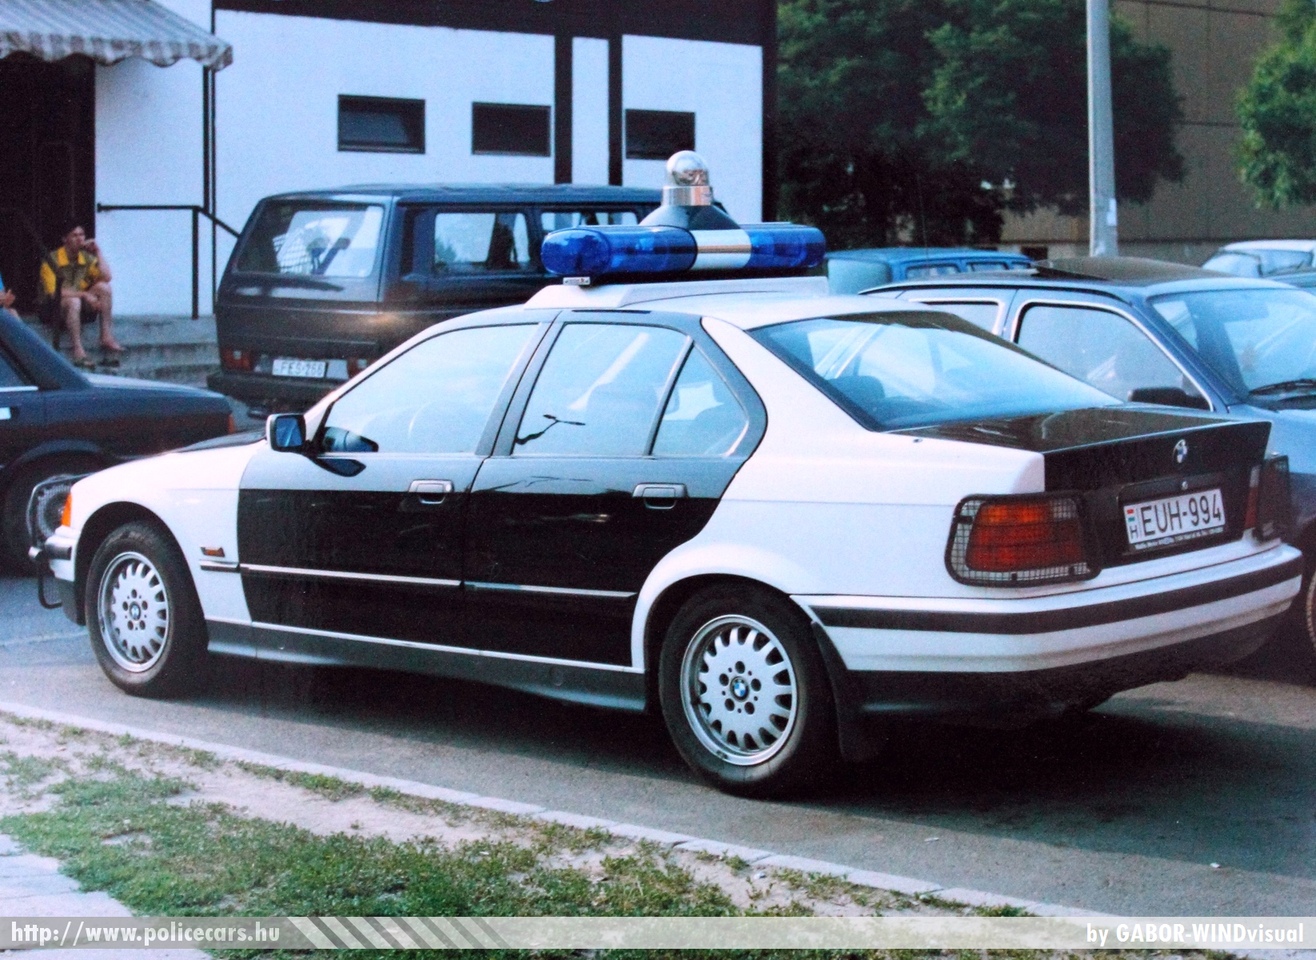 BMW 3, fotó: GABOR - WINDvisual
Keywords: EUH -994 magyar Magyarország rendőr rendőrautó rendőrség Hungary hungarian police policecar